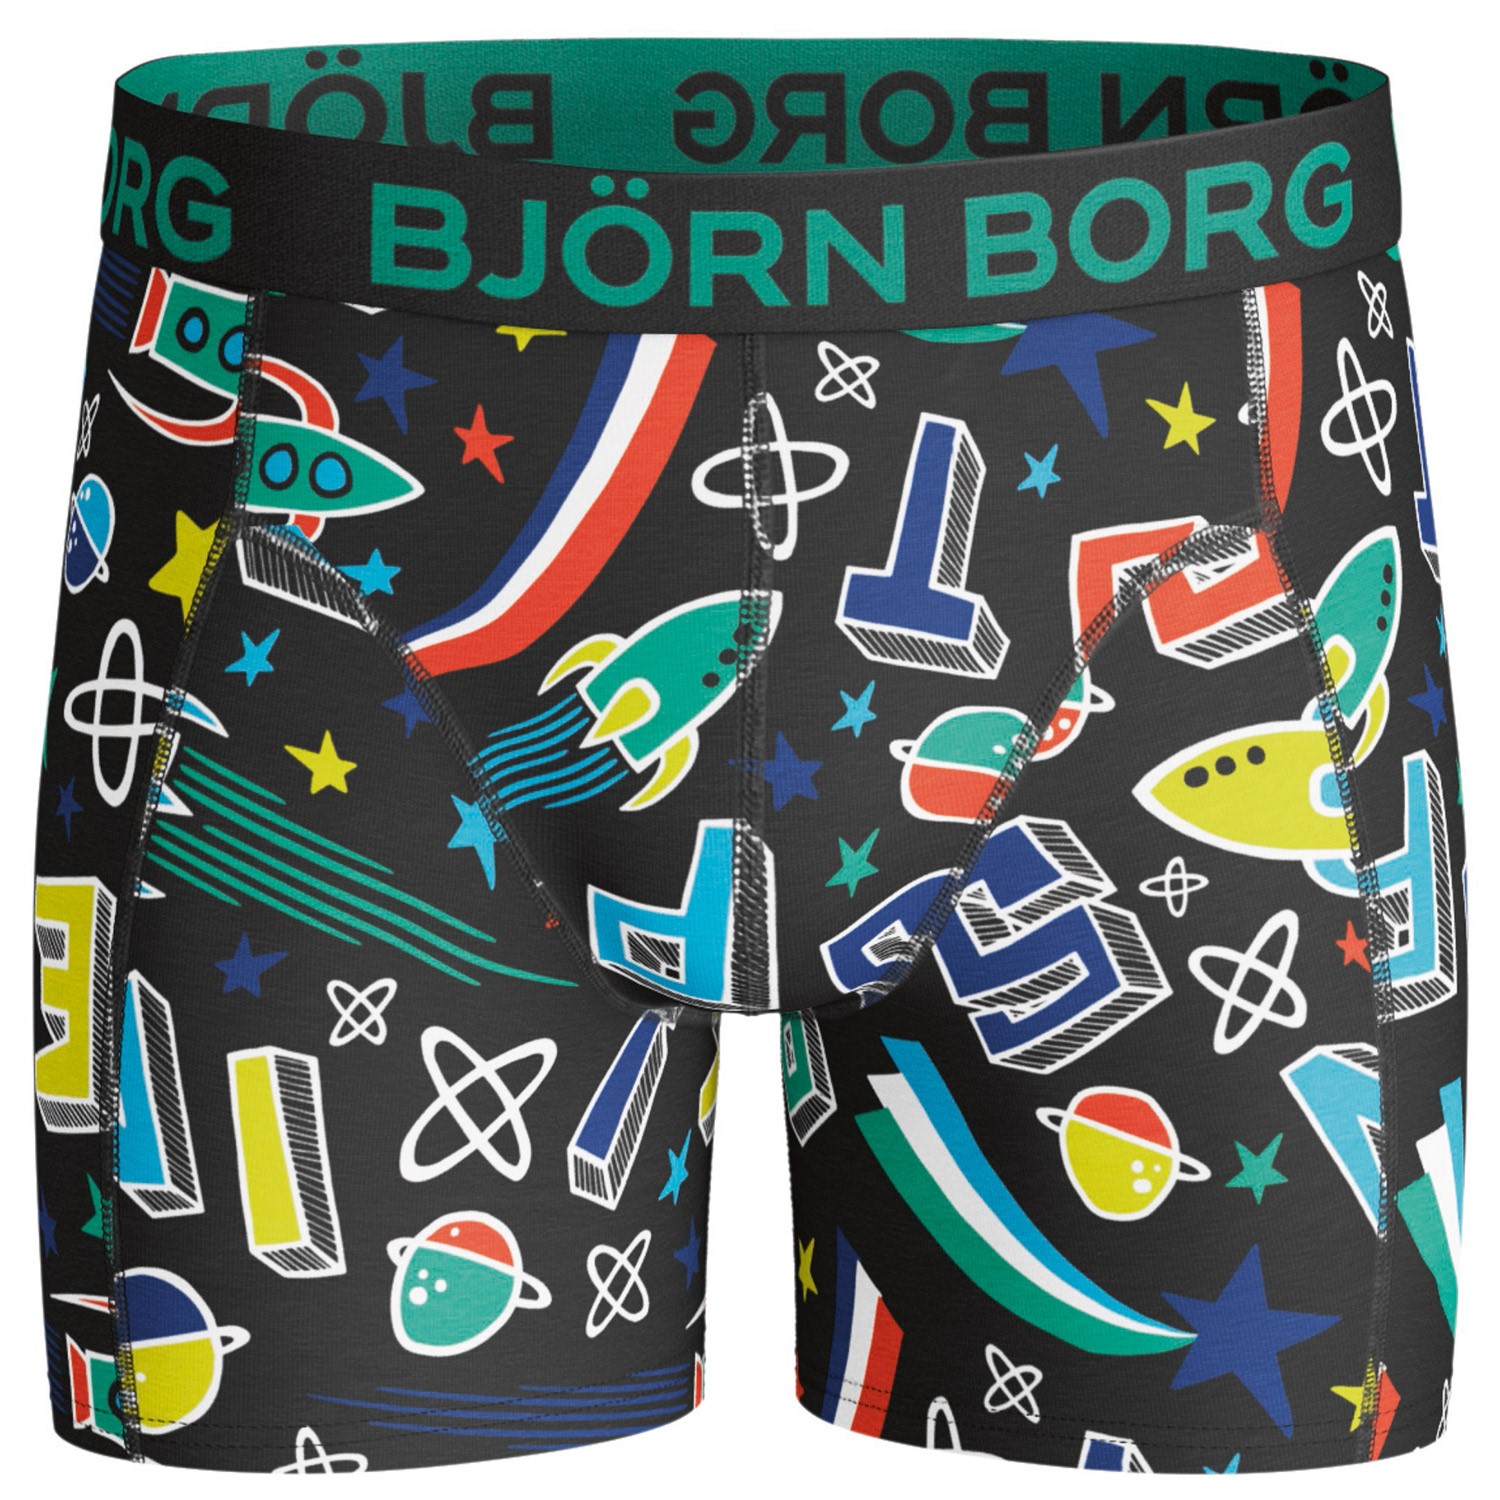 Björn Borg Lost Shorts For Boys 1420